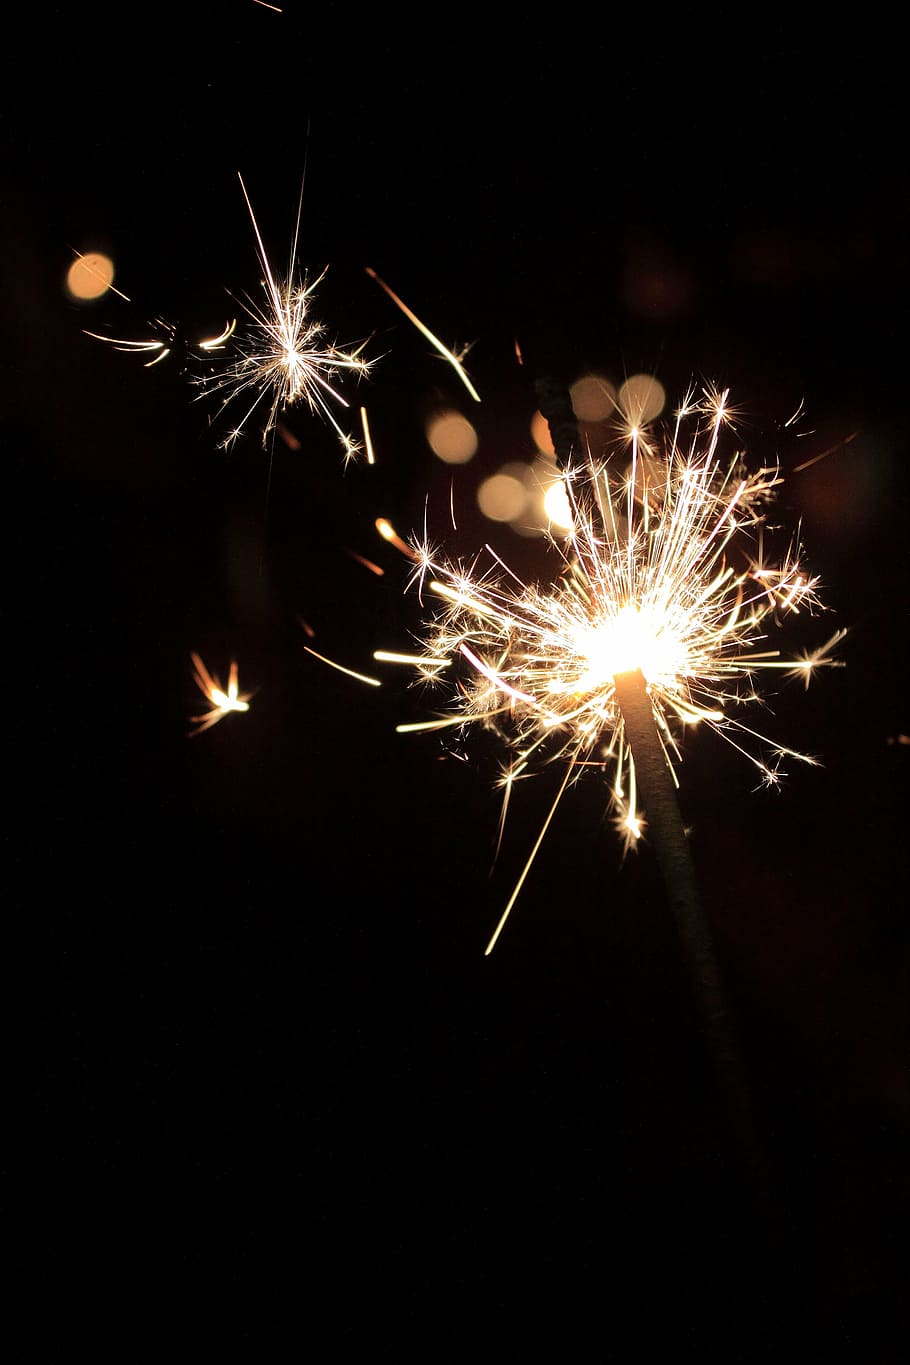 lighted sparkler, new year's eve, sparkler, radio, fireworks, firework - man made object, firework display, sparks, celebration, arts culture and entertainment